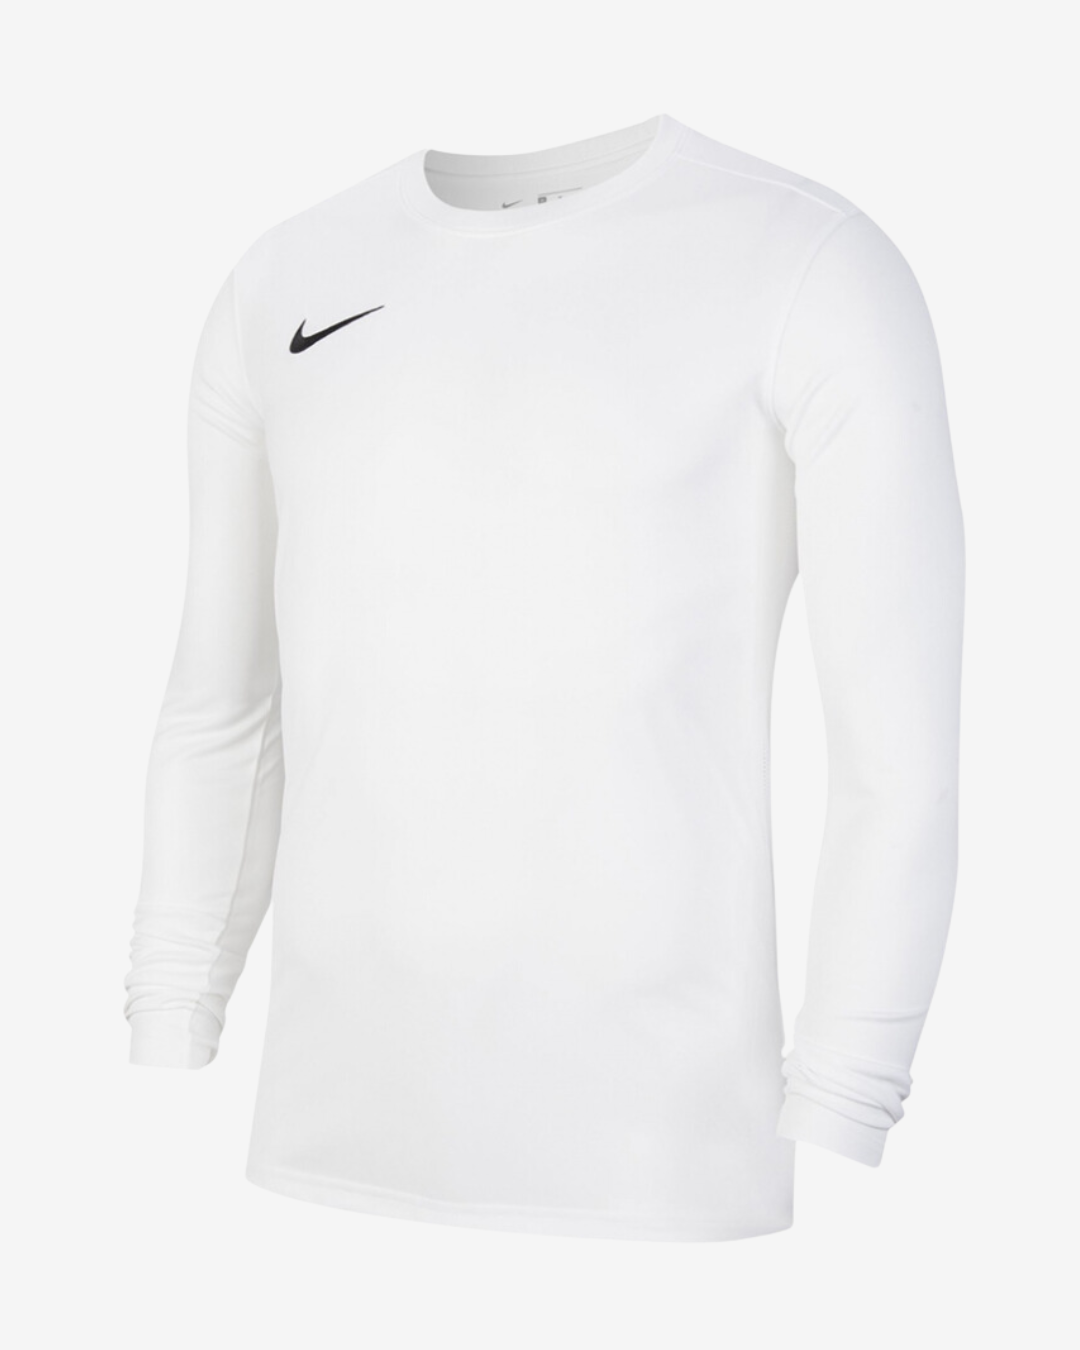 Nike Dri-fit park 7 langærmet t-shirt - Hvid - Str. S - Modish.dk